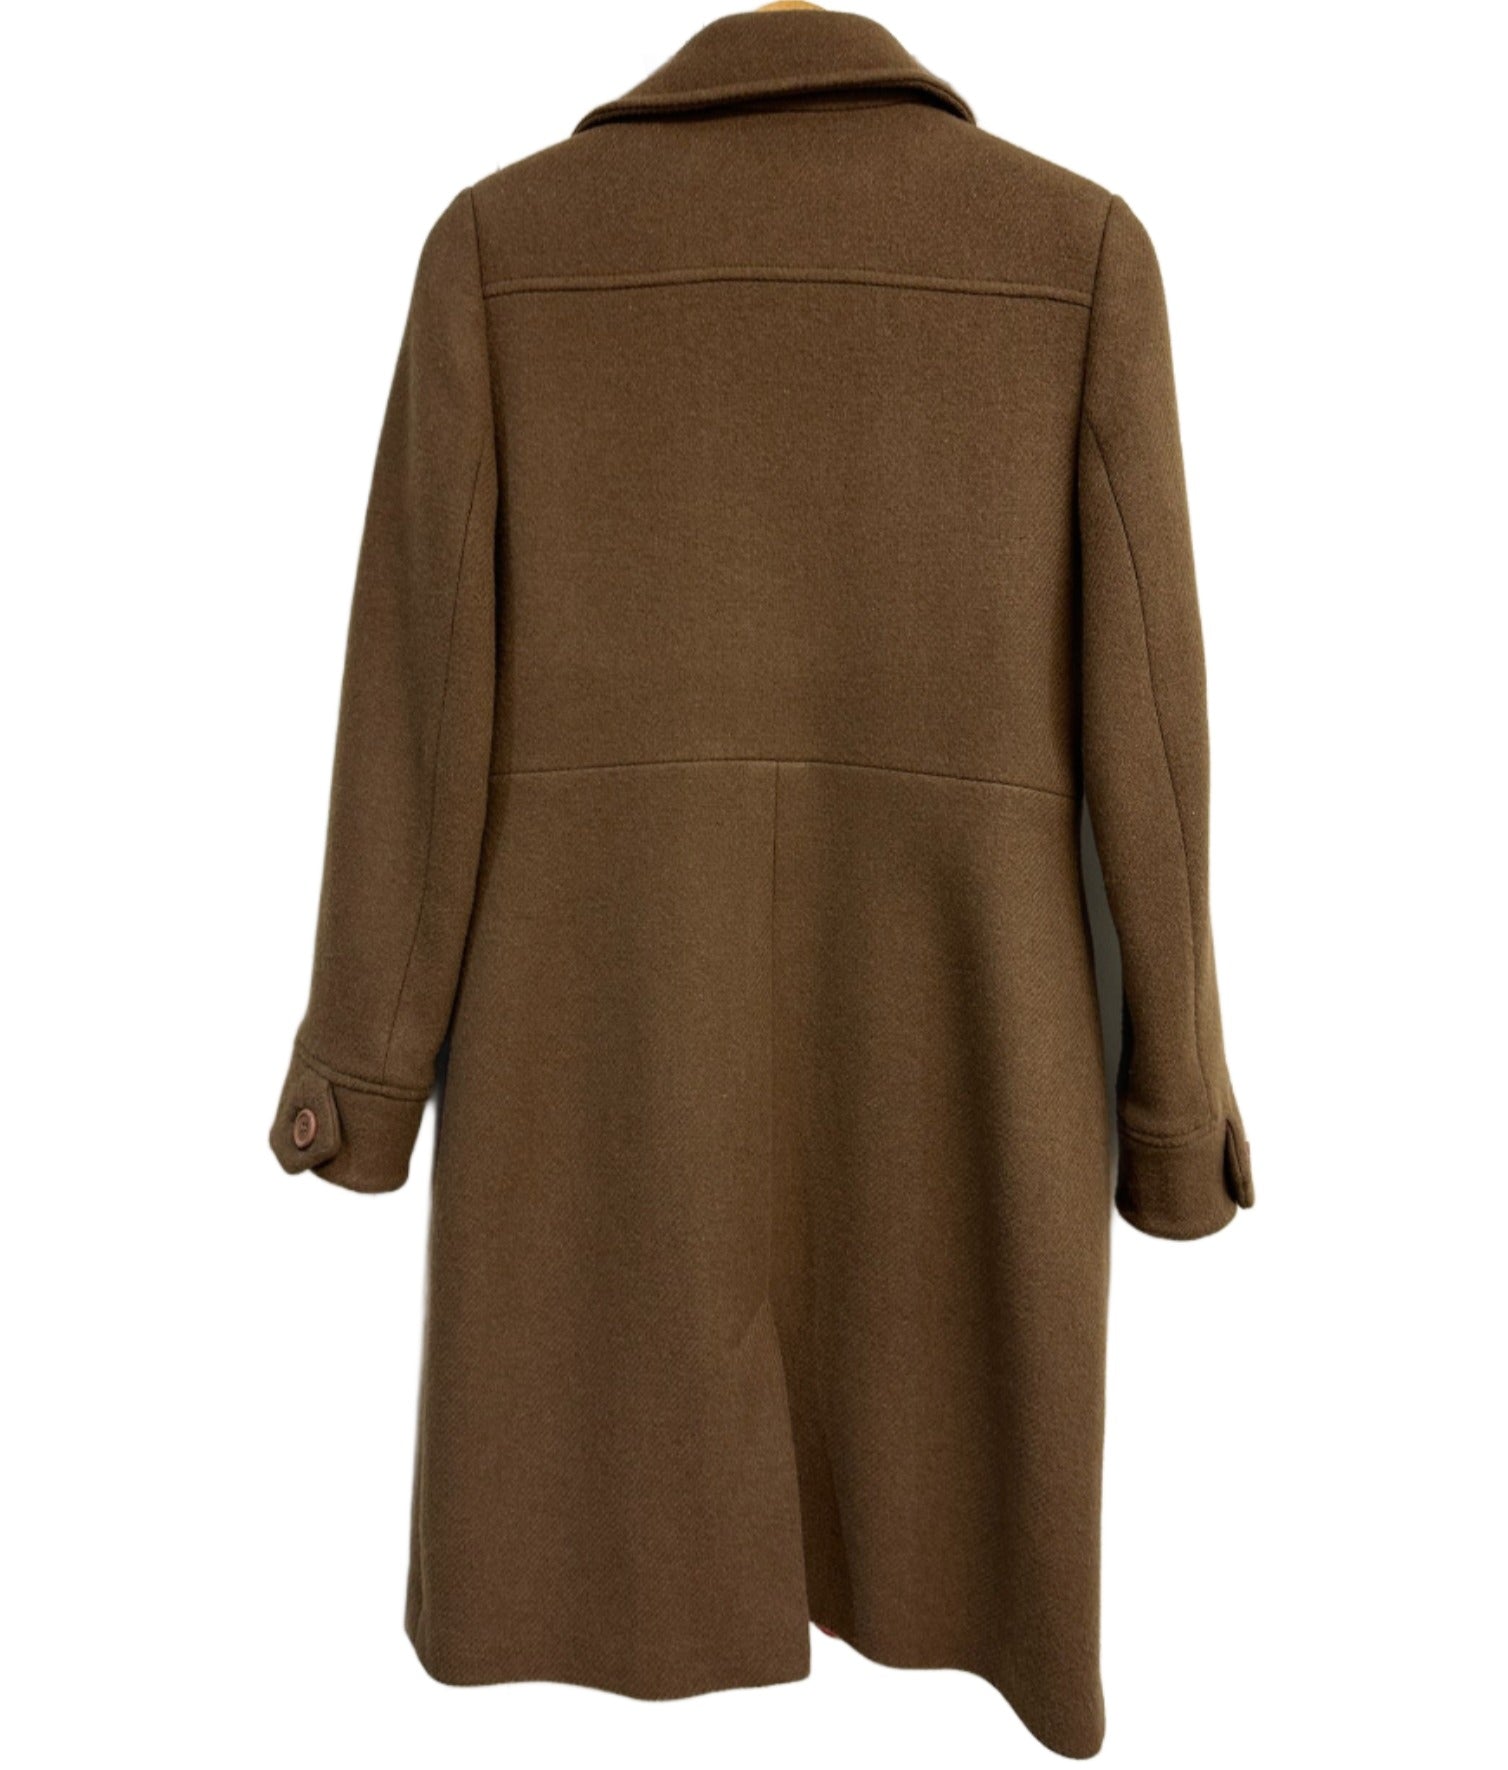 Boden 3/4 Length Tan Coat 12